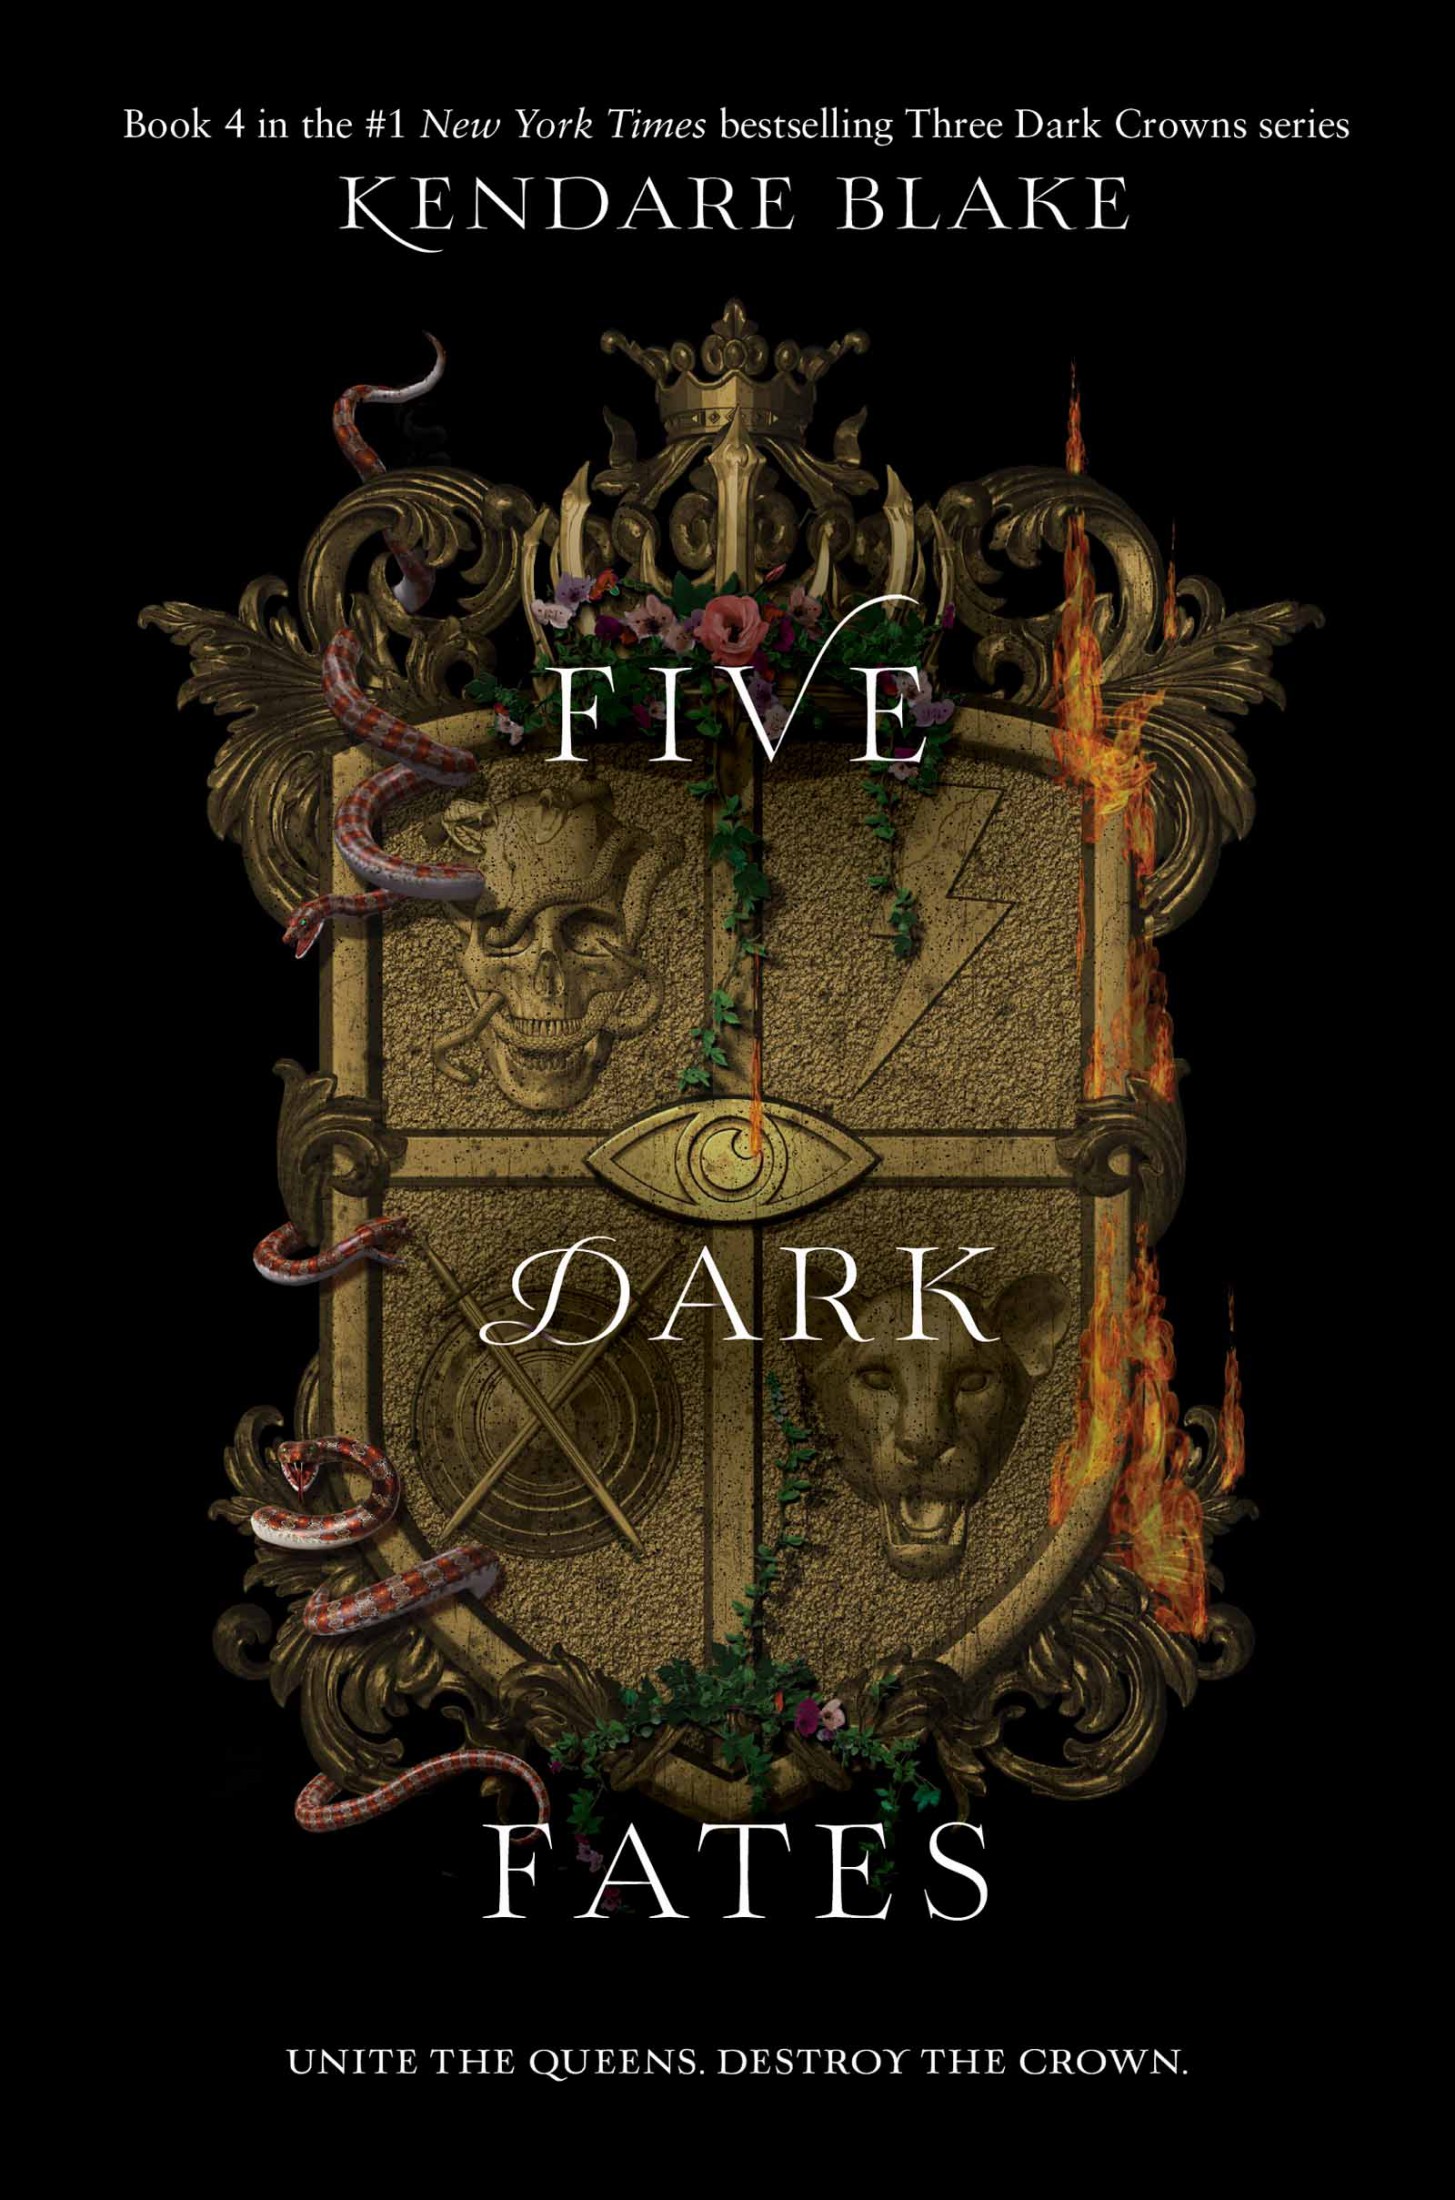 Five Dark Fates